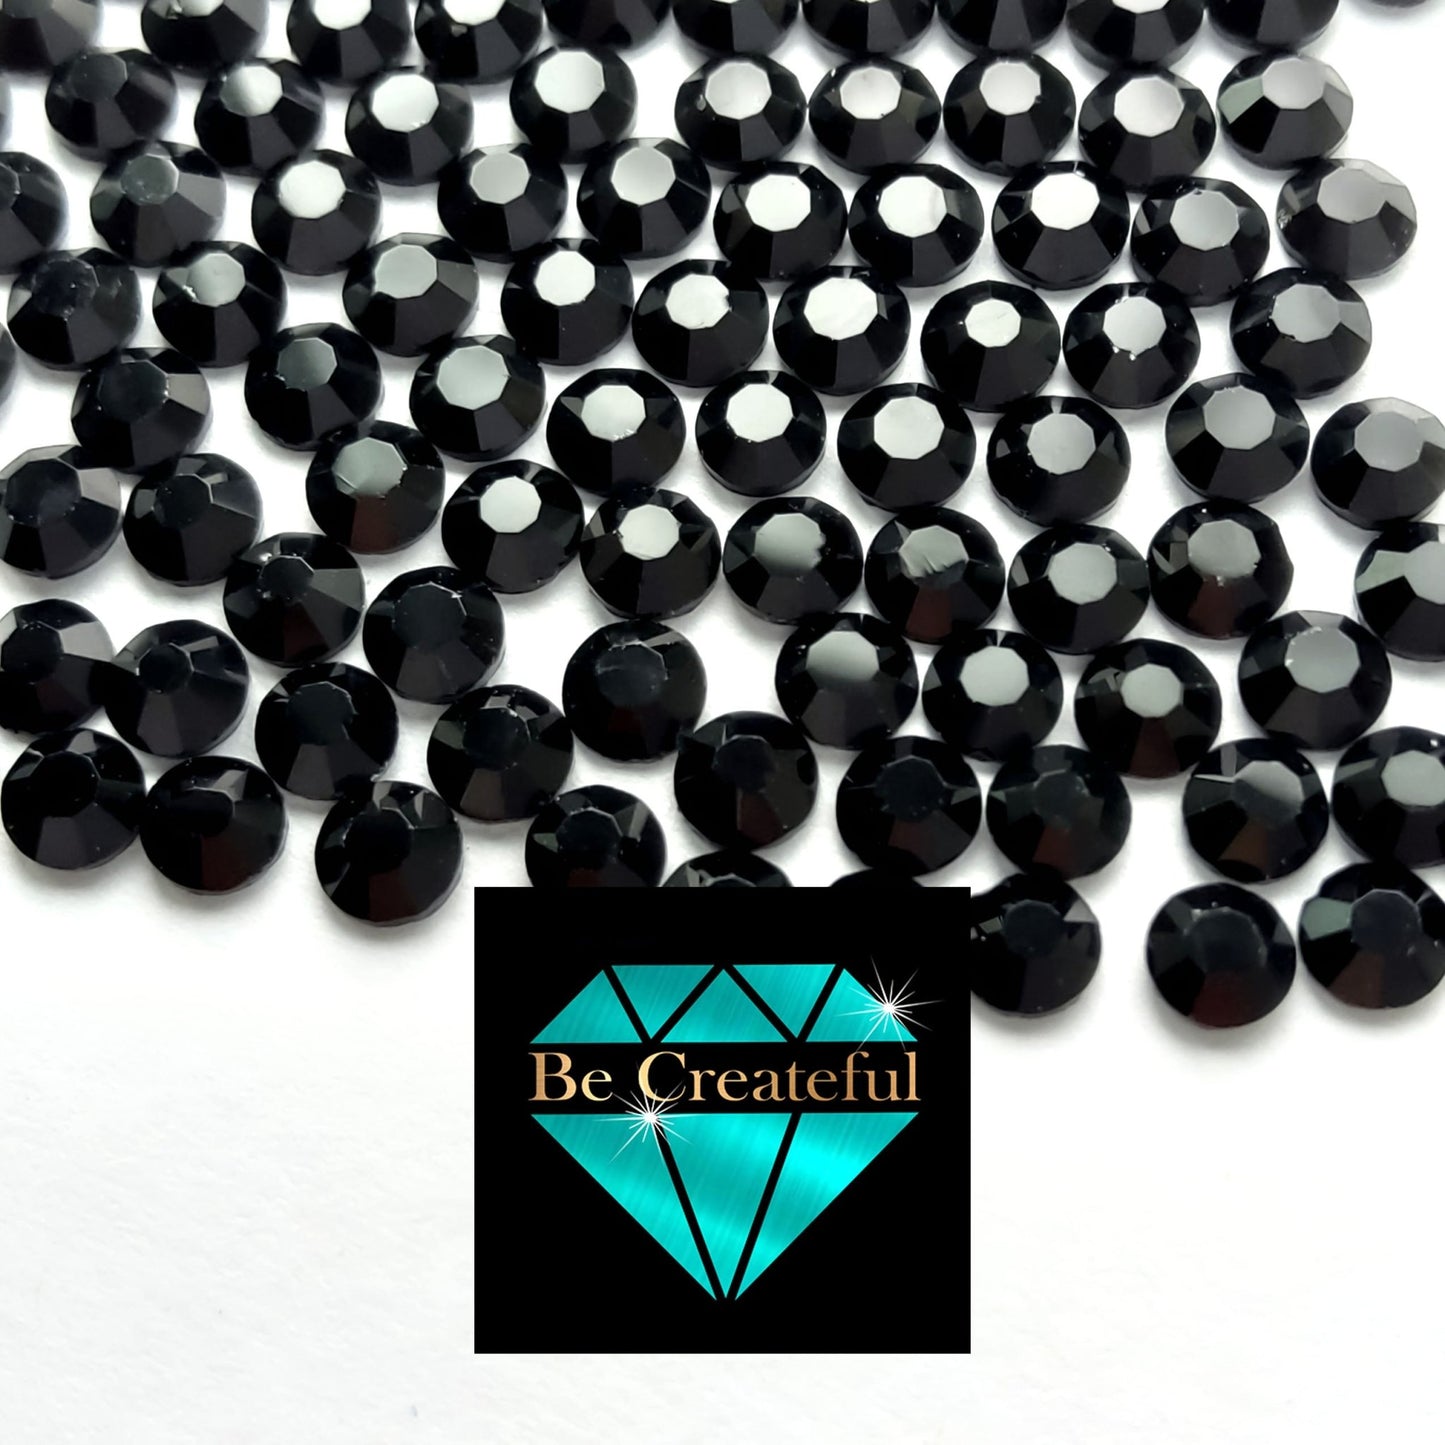 DMC Jet Black Glass Hotfix Rhinestones - Be Createful, Beautiful Rhinestones at wholesale prices.